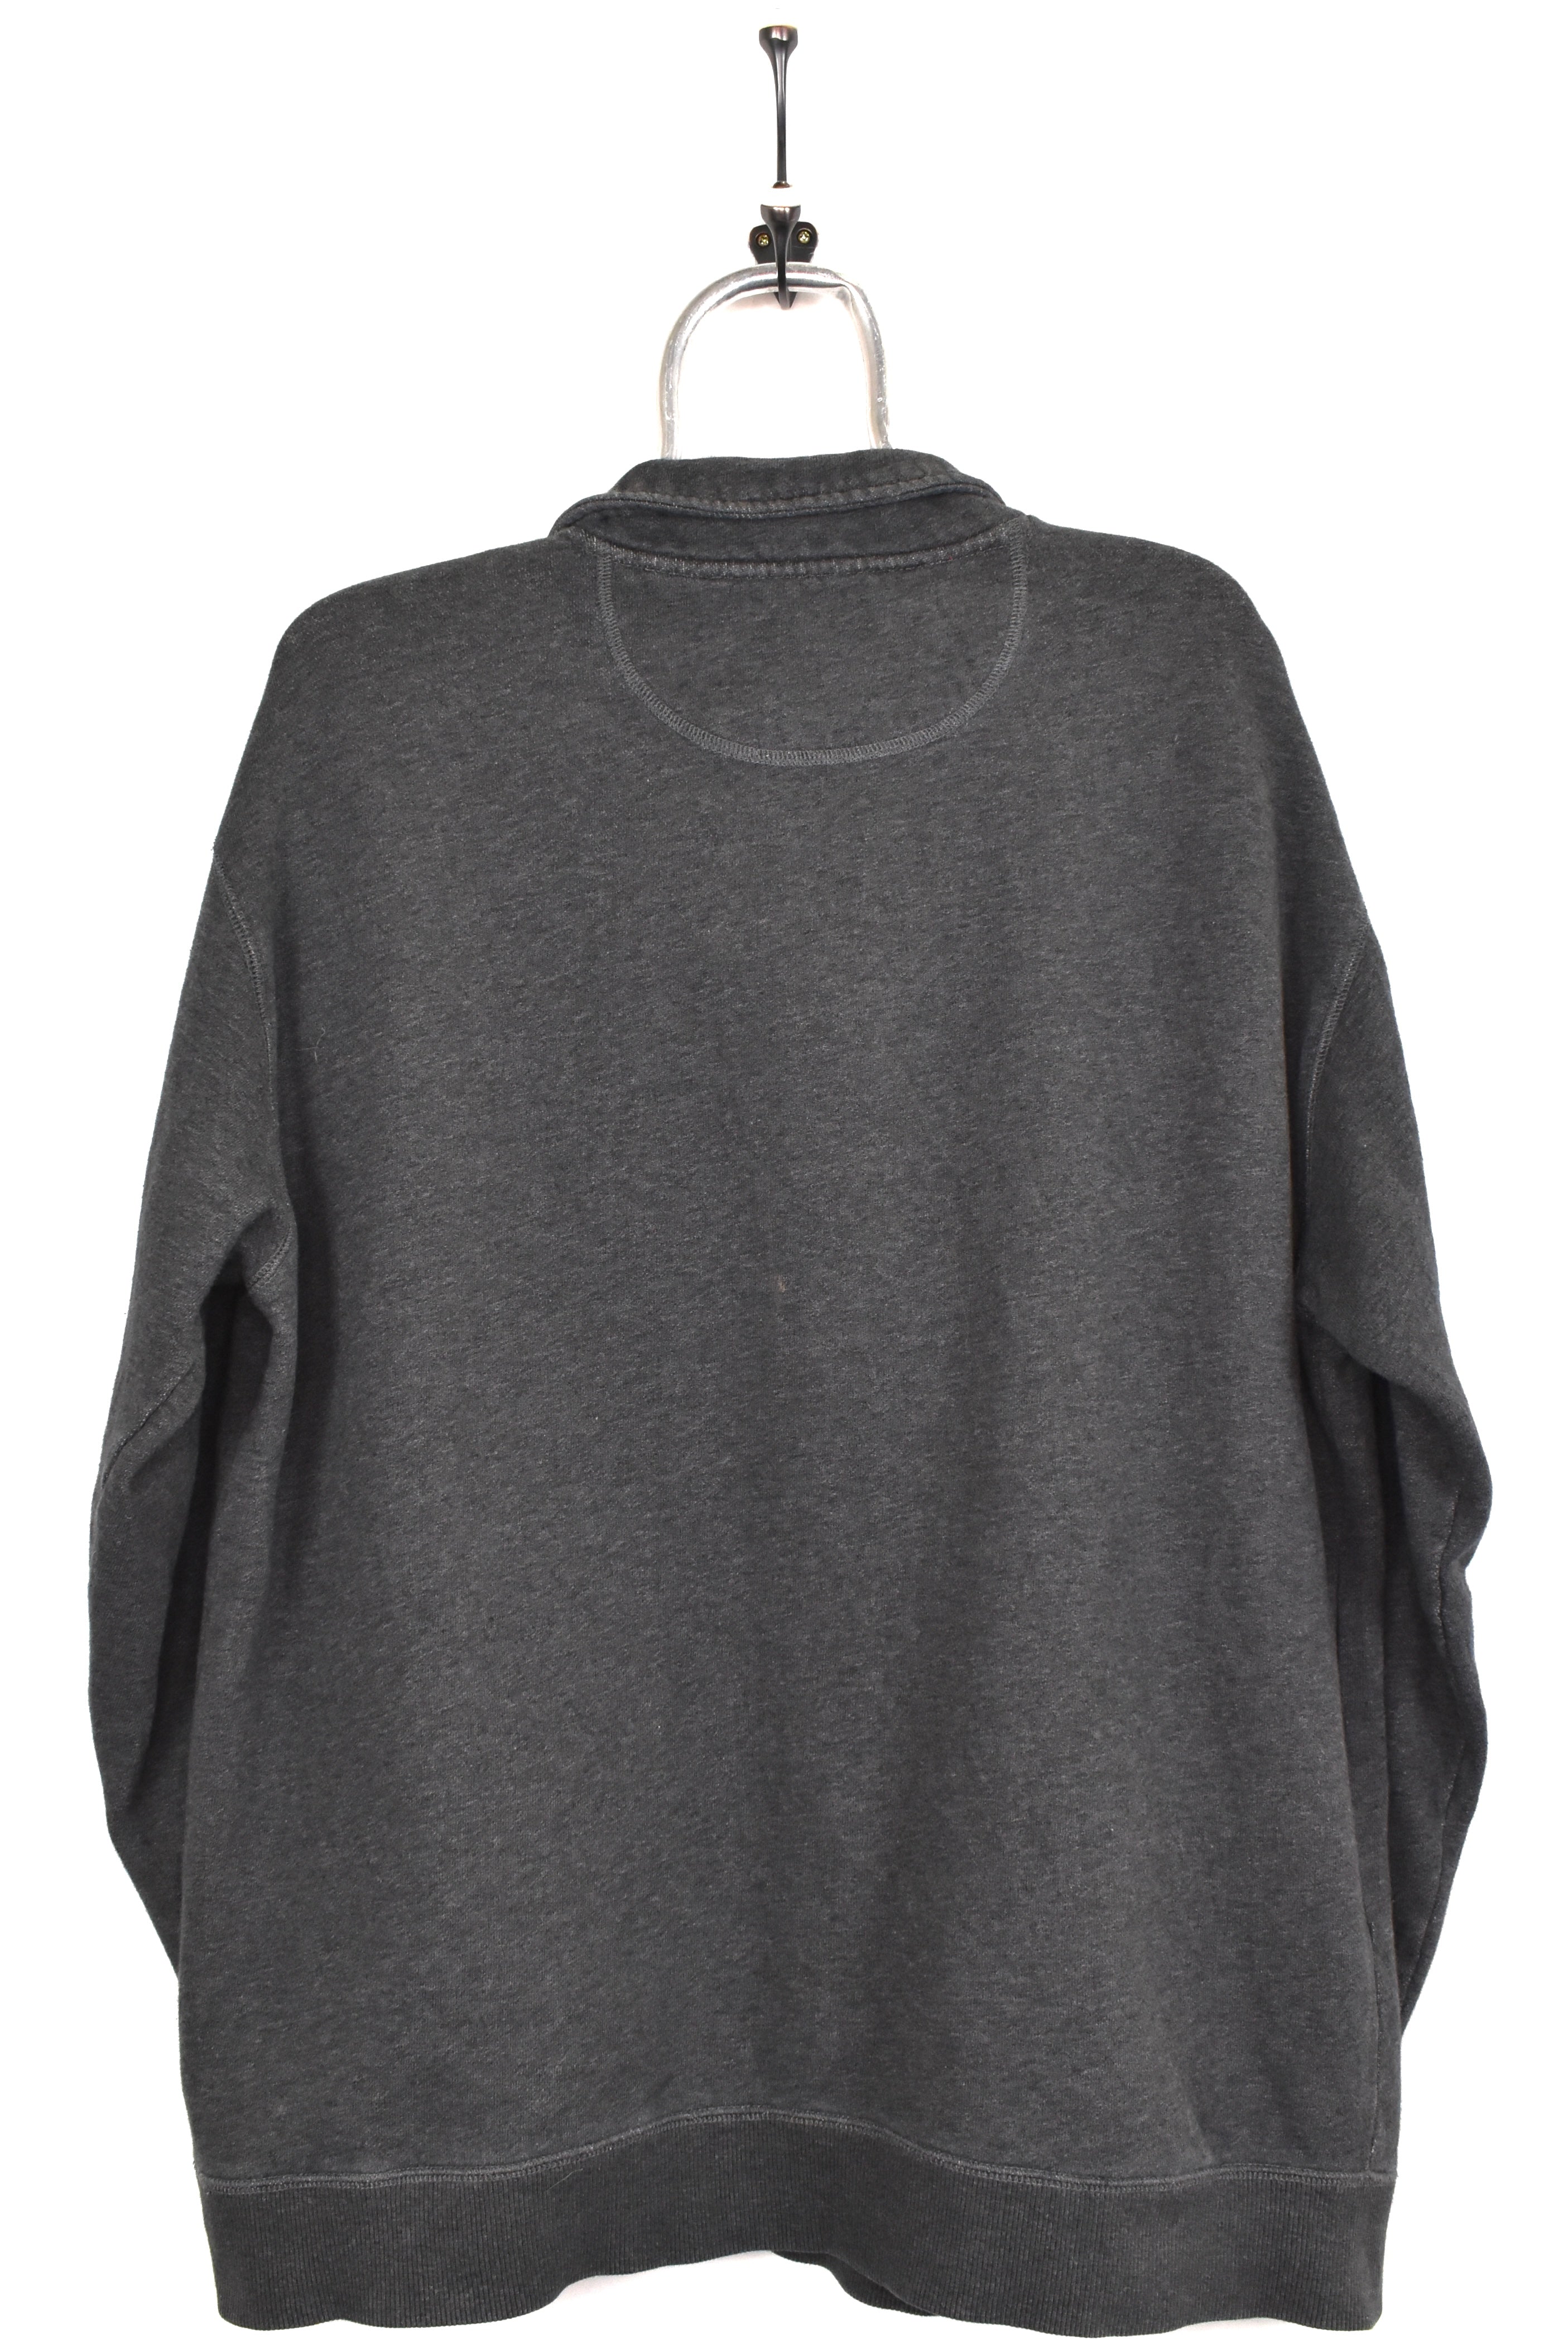 Vintage Fila sweatshirt, grey collared 1/4 zip - AU XL